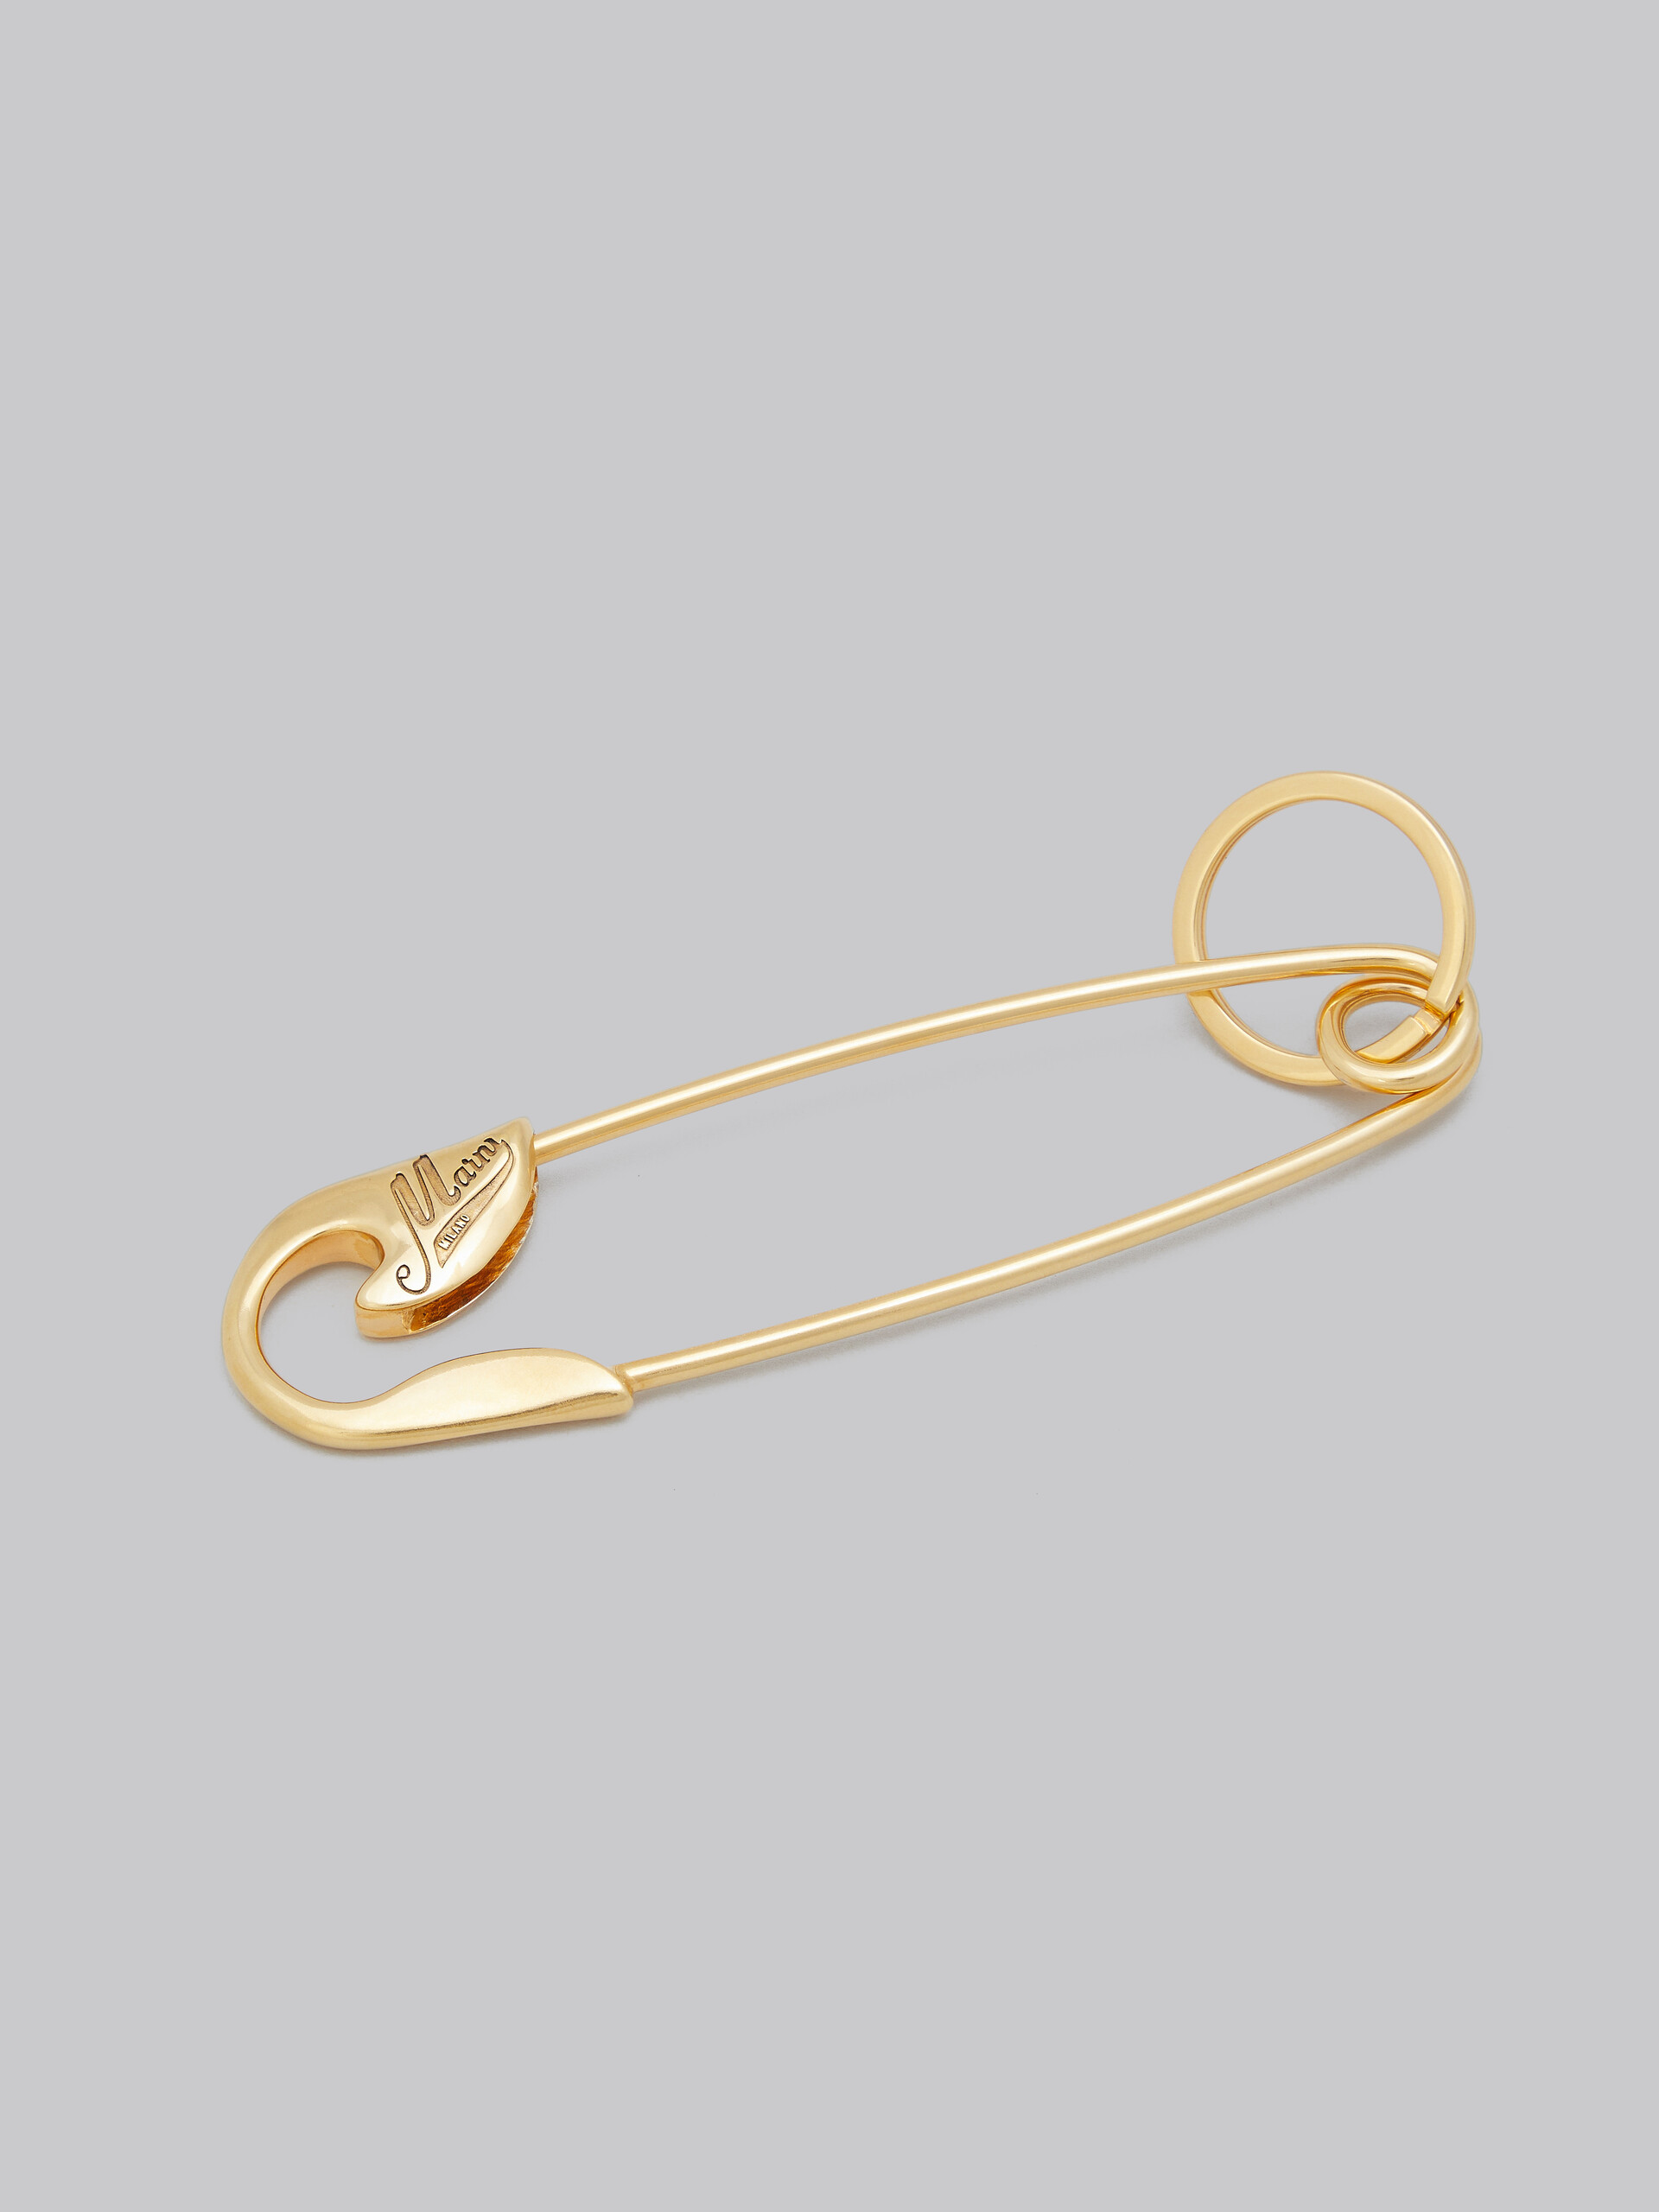 Gold brooch keyring pendant - Jewellery - Image 3